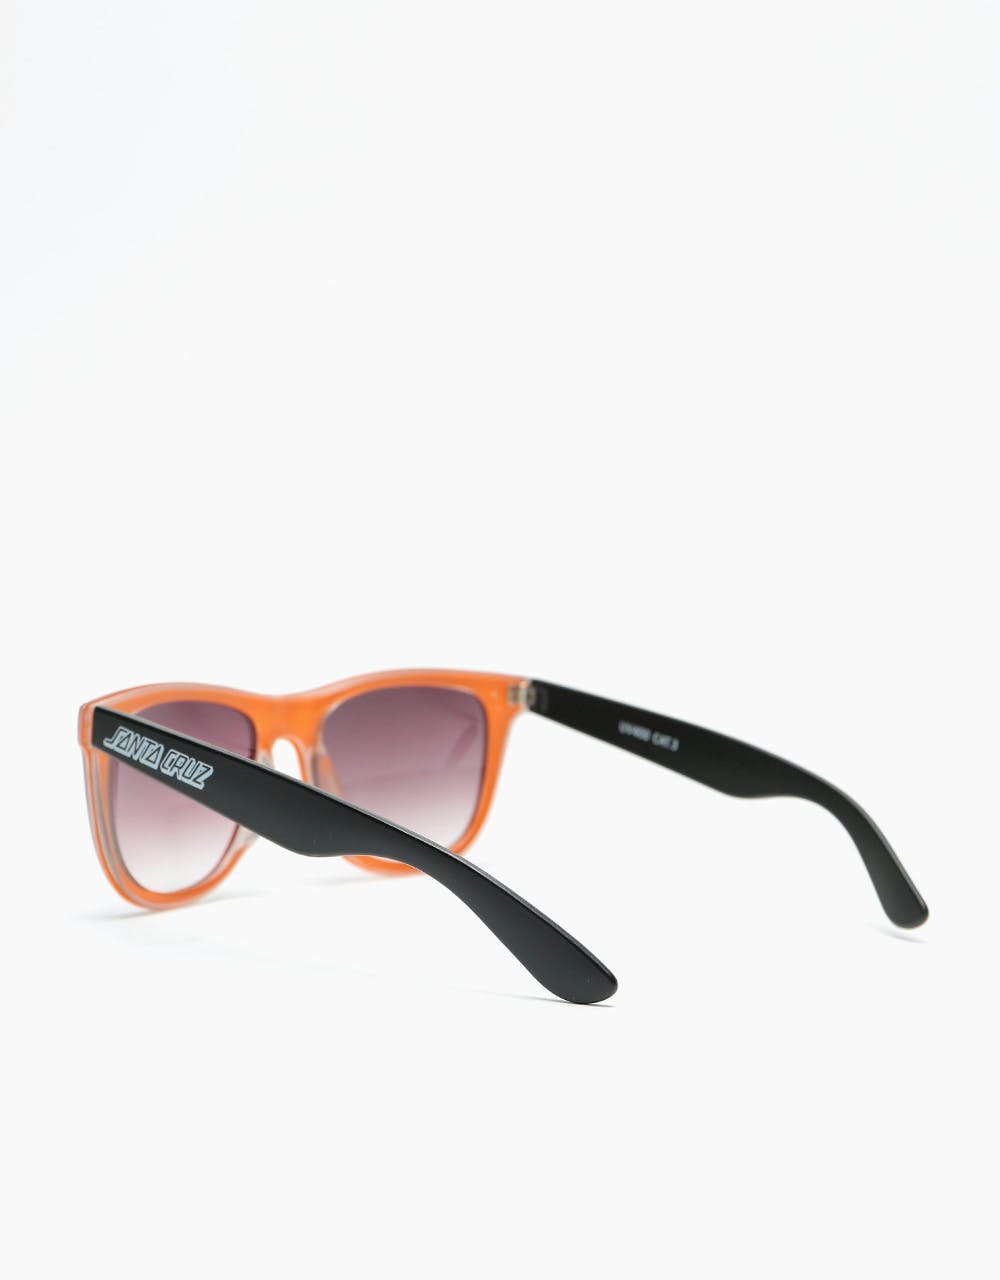 Santa Cruz Bench Sunglasses - Black/Orange